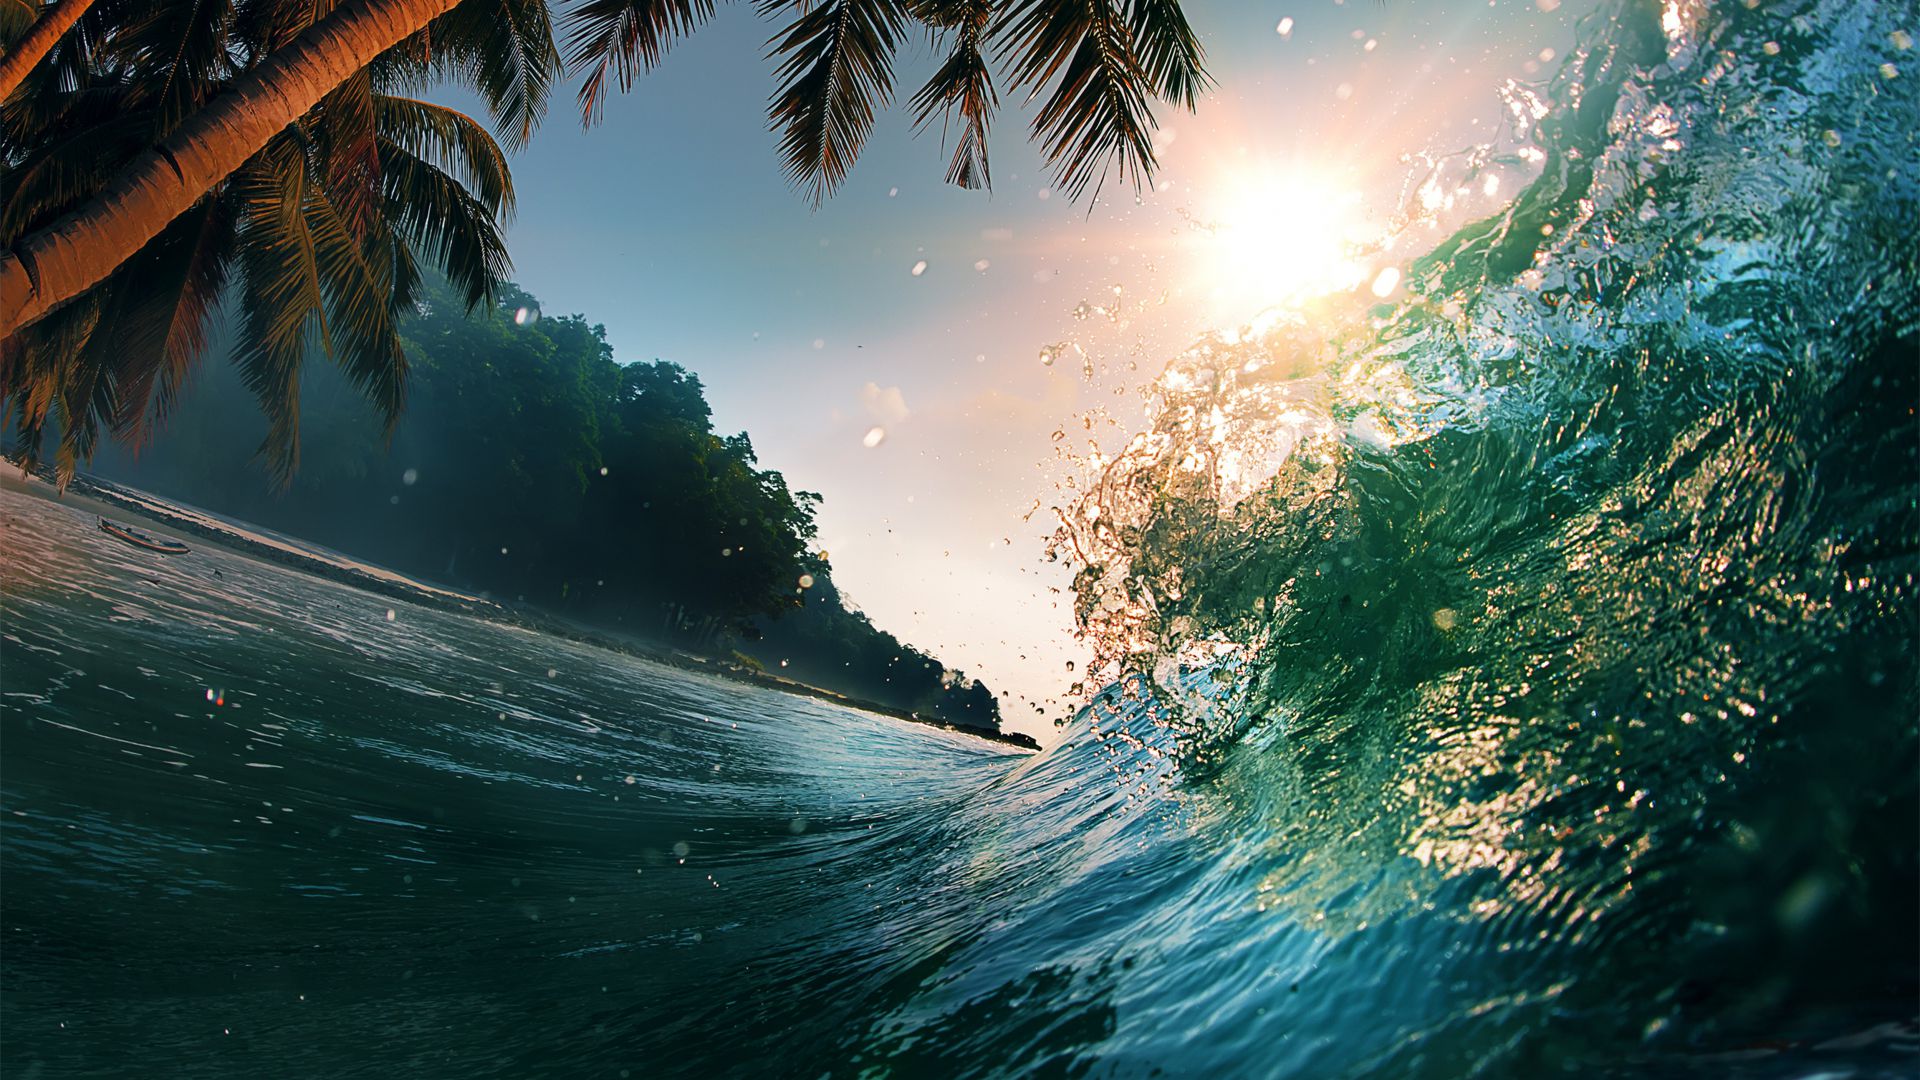 Волна, 5k, 4k, 8k, океан, пальмы, солнце, Wave, 5k, 4k wallpaper, 8k, ocean, palms, sun (horizontal)